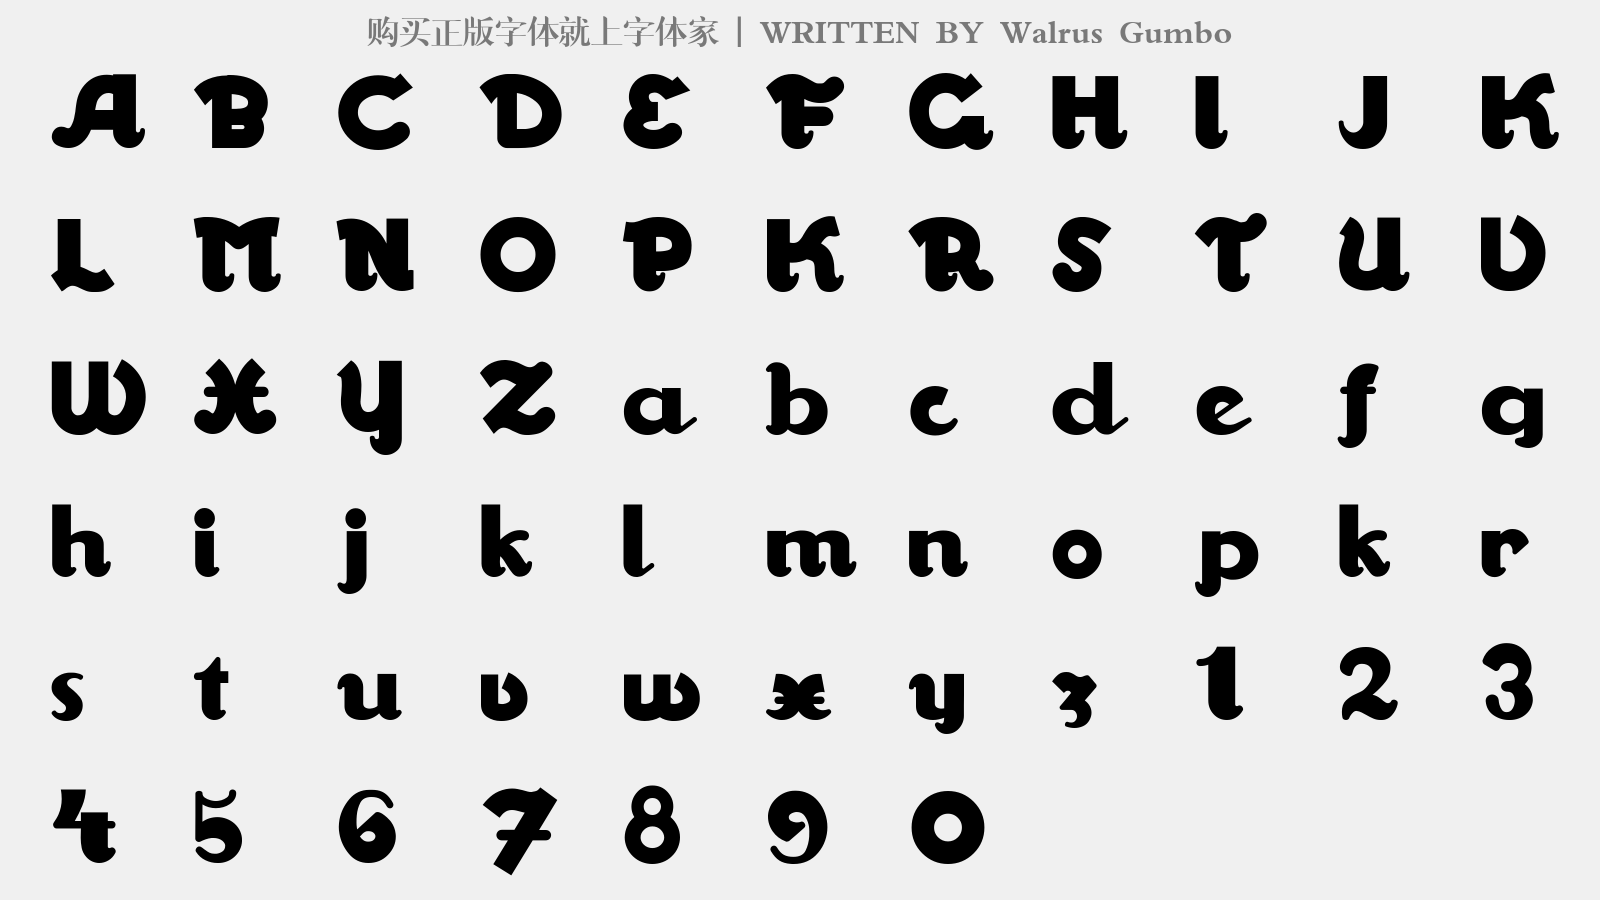 Walrus Gumbo - 大写字母/小写字母/数字